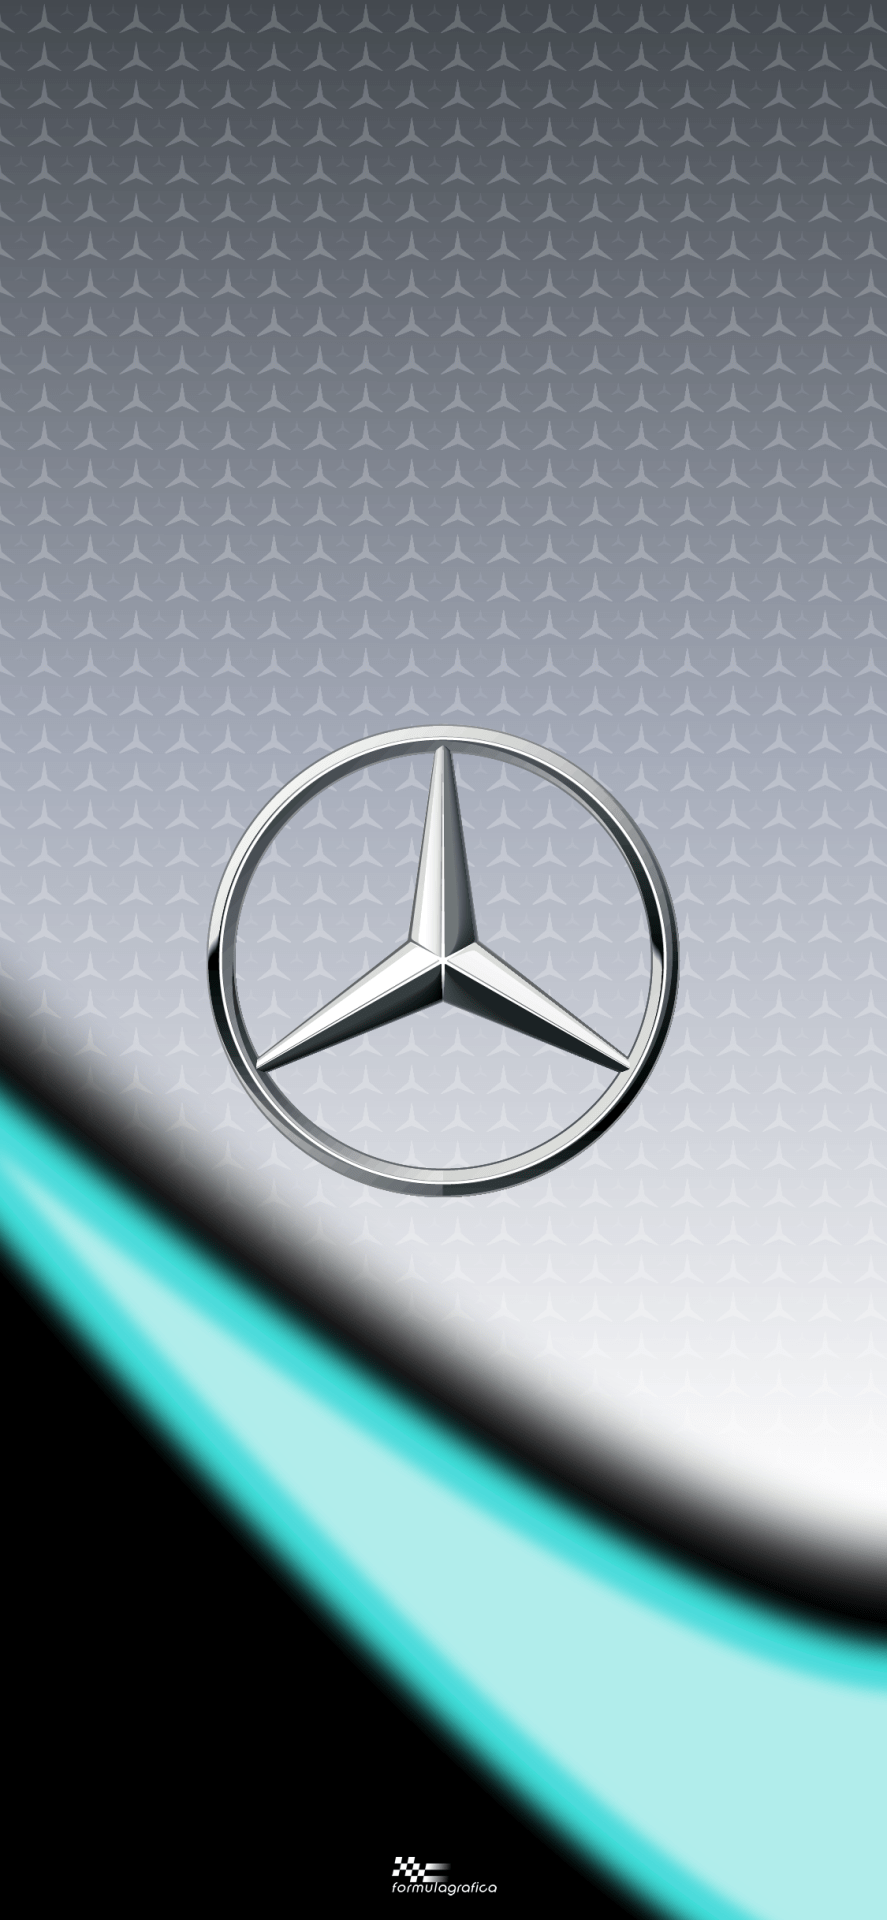 Mercedes Logo iPhone Wallpapers - Top Free Mercedes Logo iPhone ...